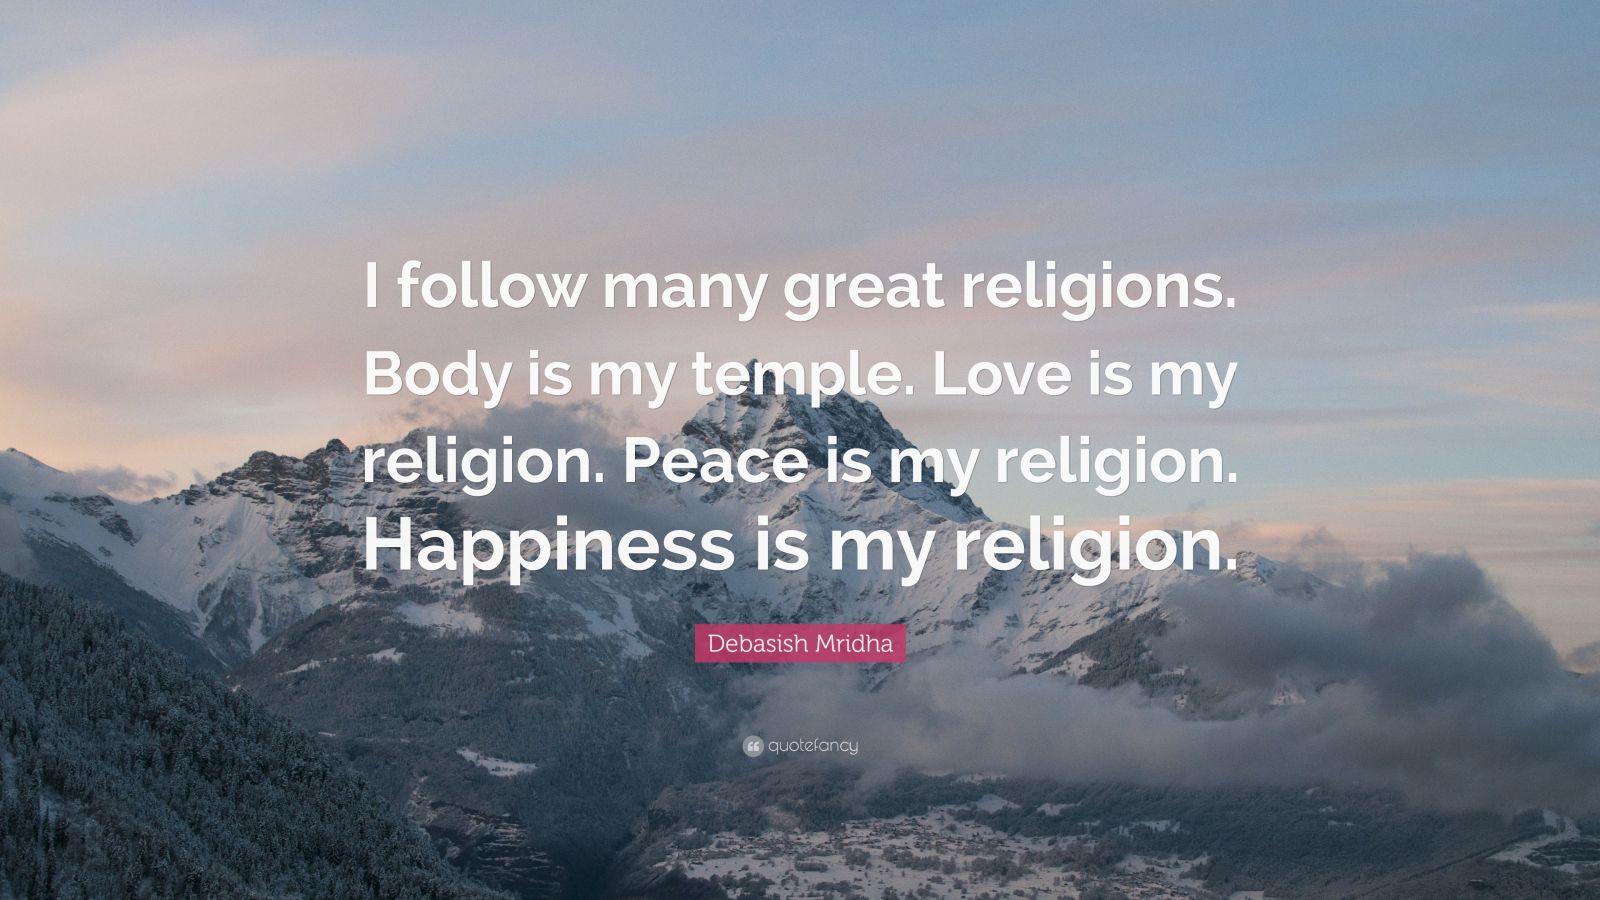 Debasish Mridha Quote: “I follow many great religions. Body is my ...